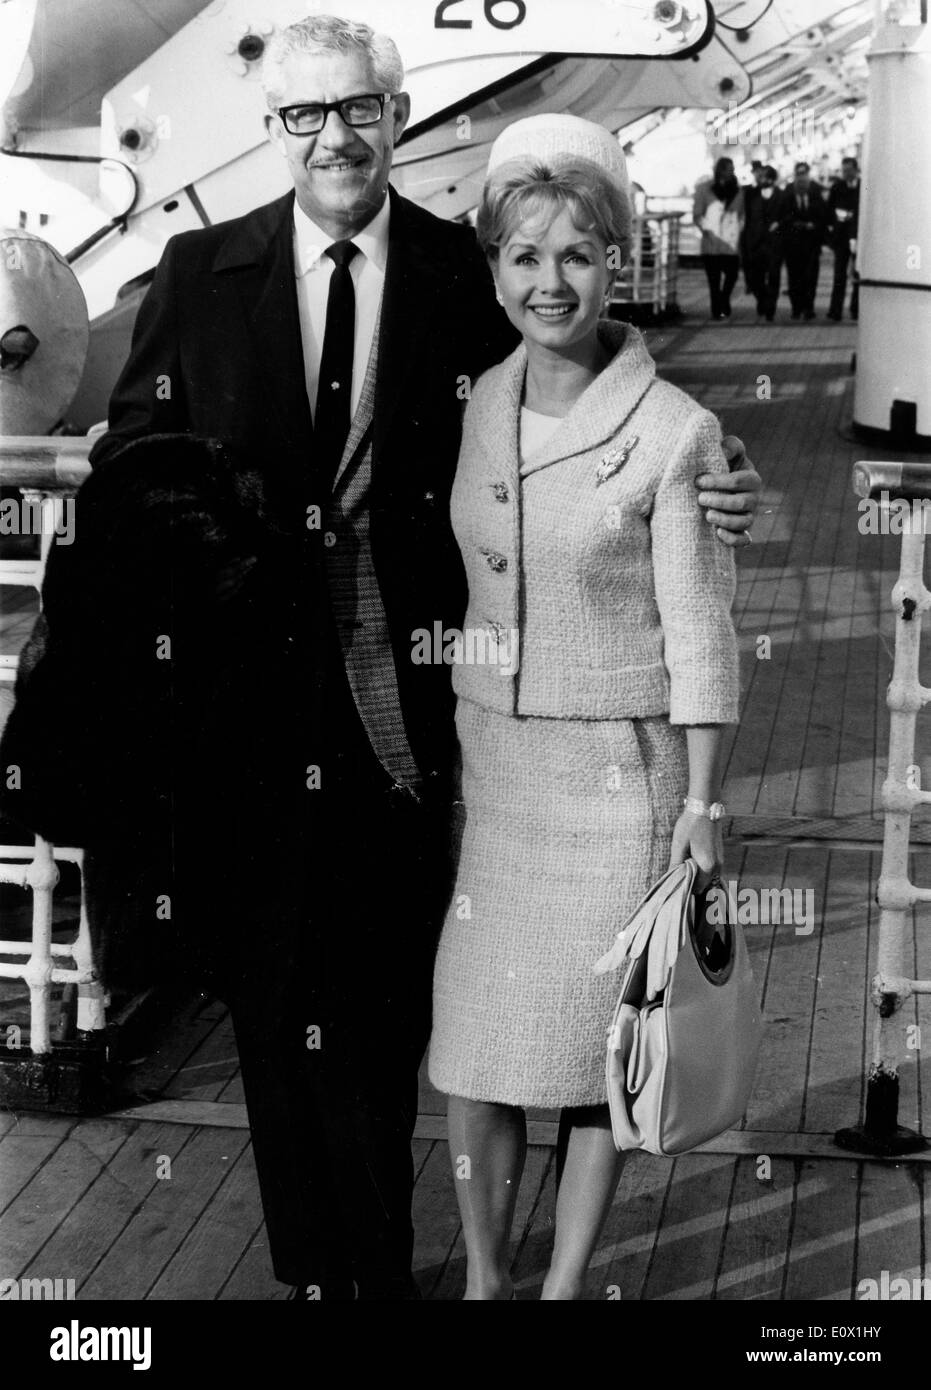 Actress Debbie Reynolds with husband Harry Karl Stock Photo